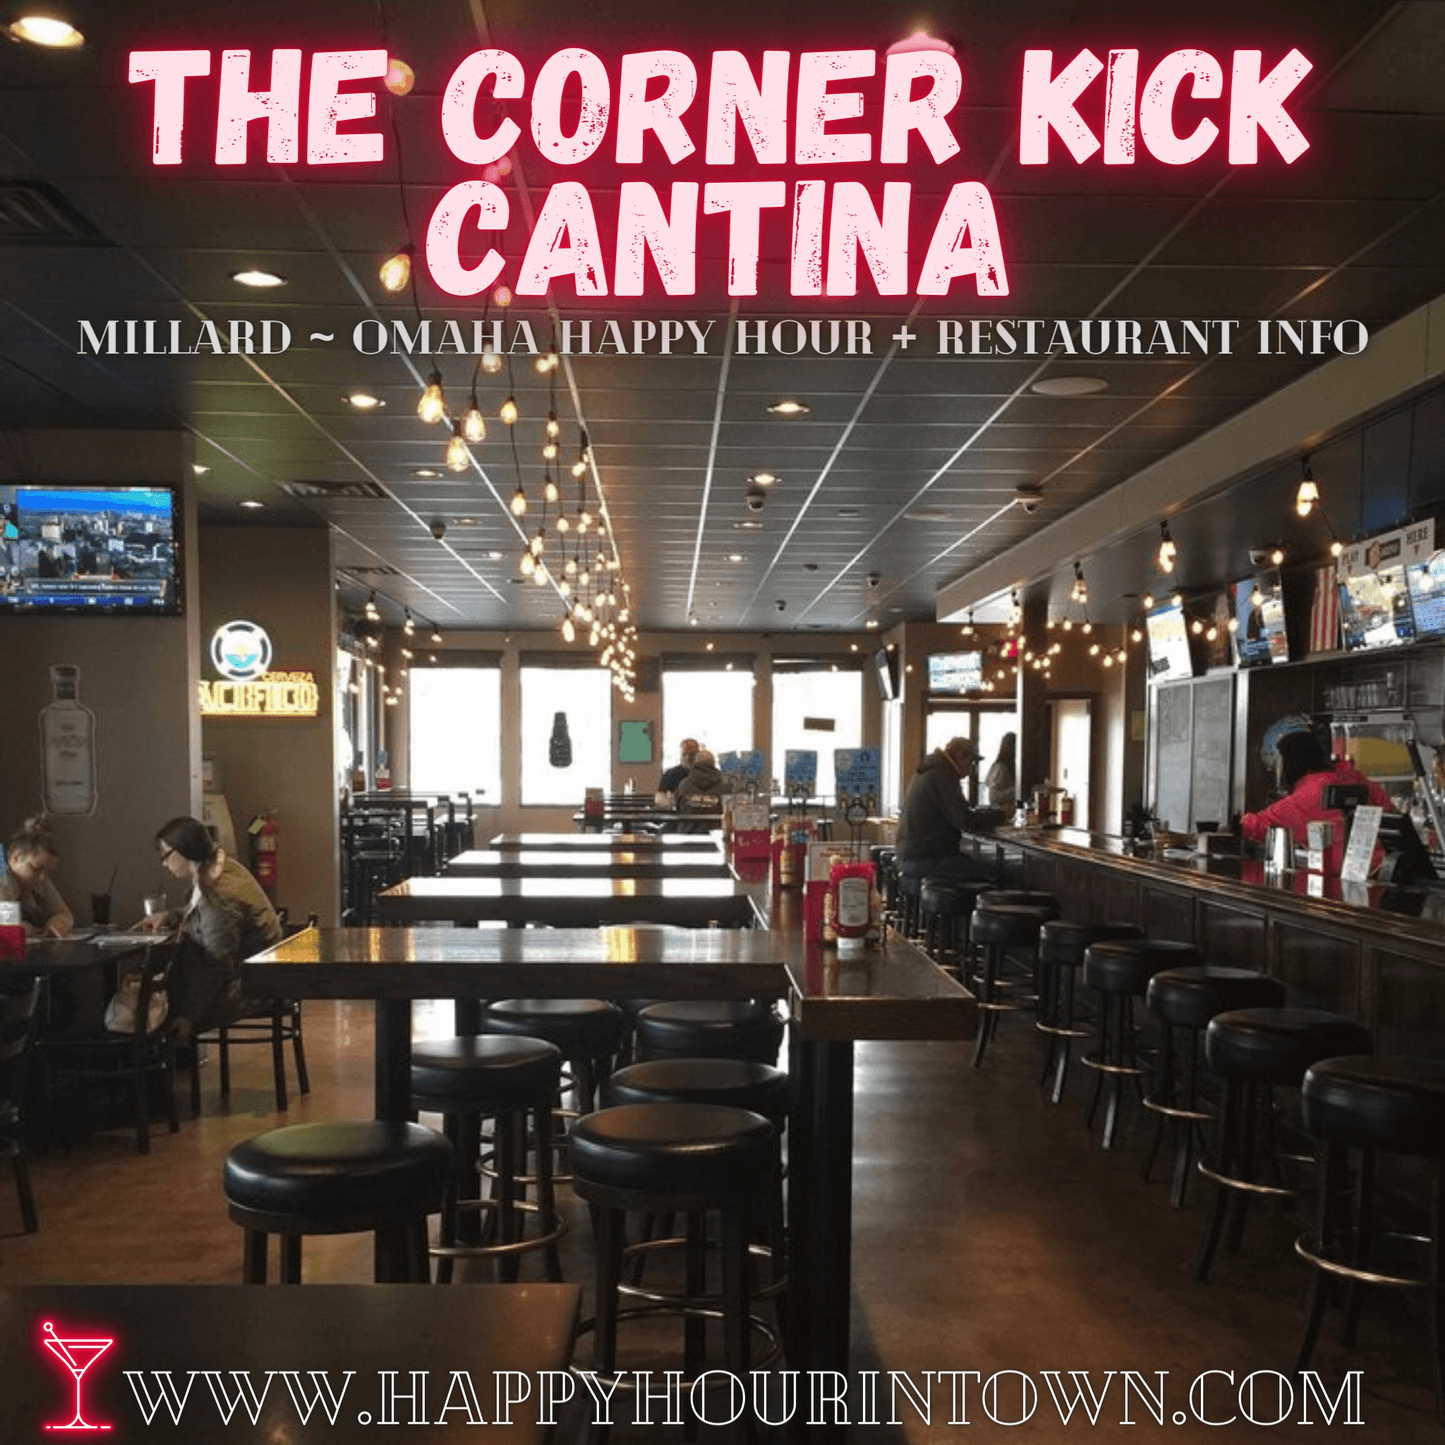 The Corner Kick Cantina: Millard 🍻